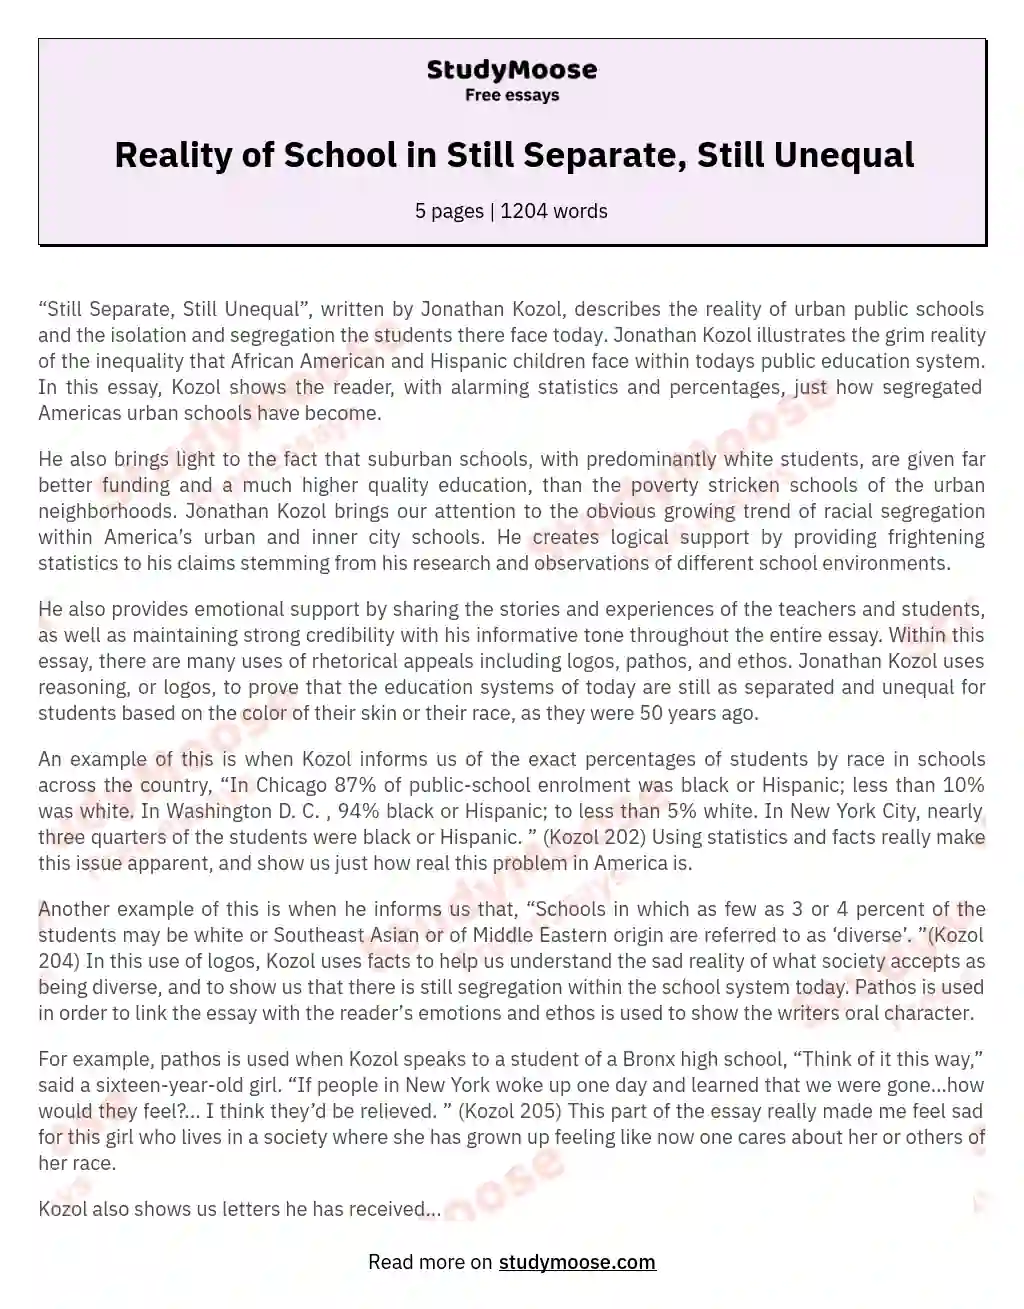 Reality of School in Still Separate, Still Unequal